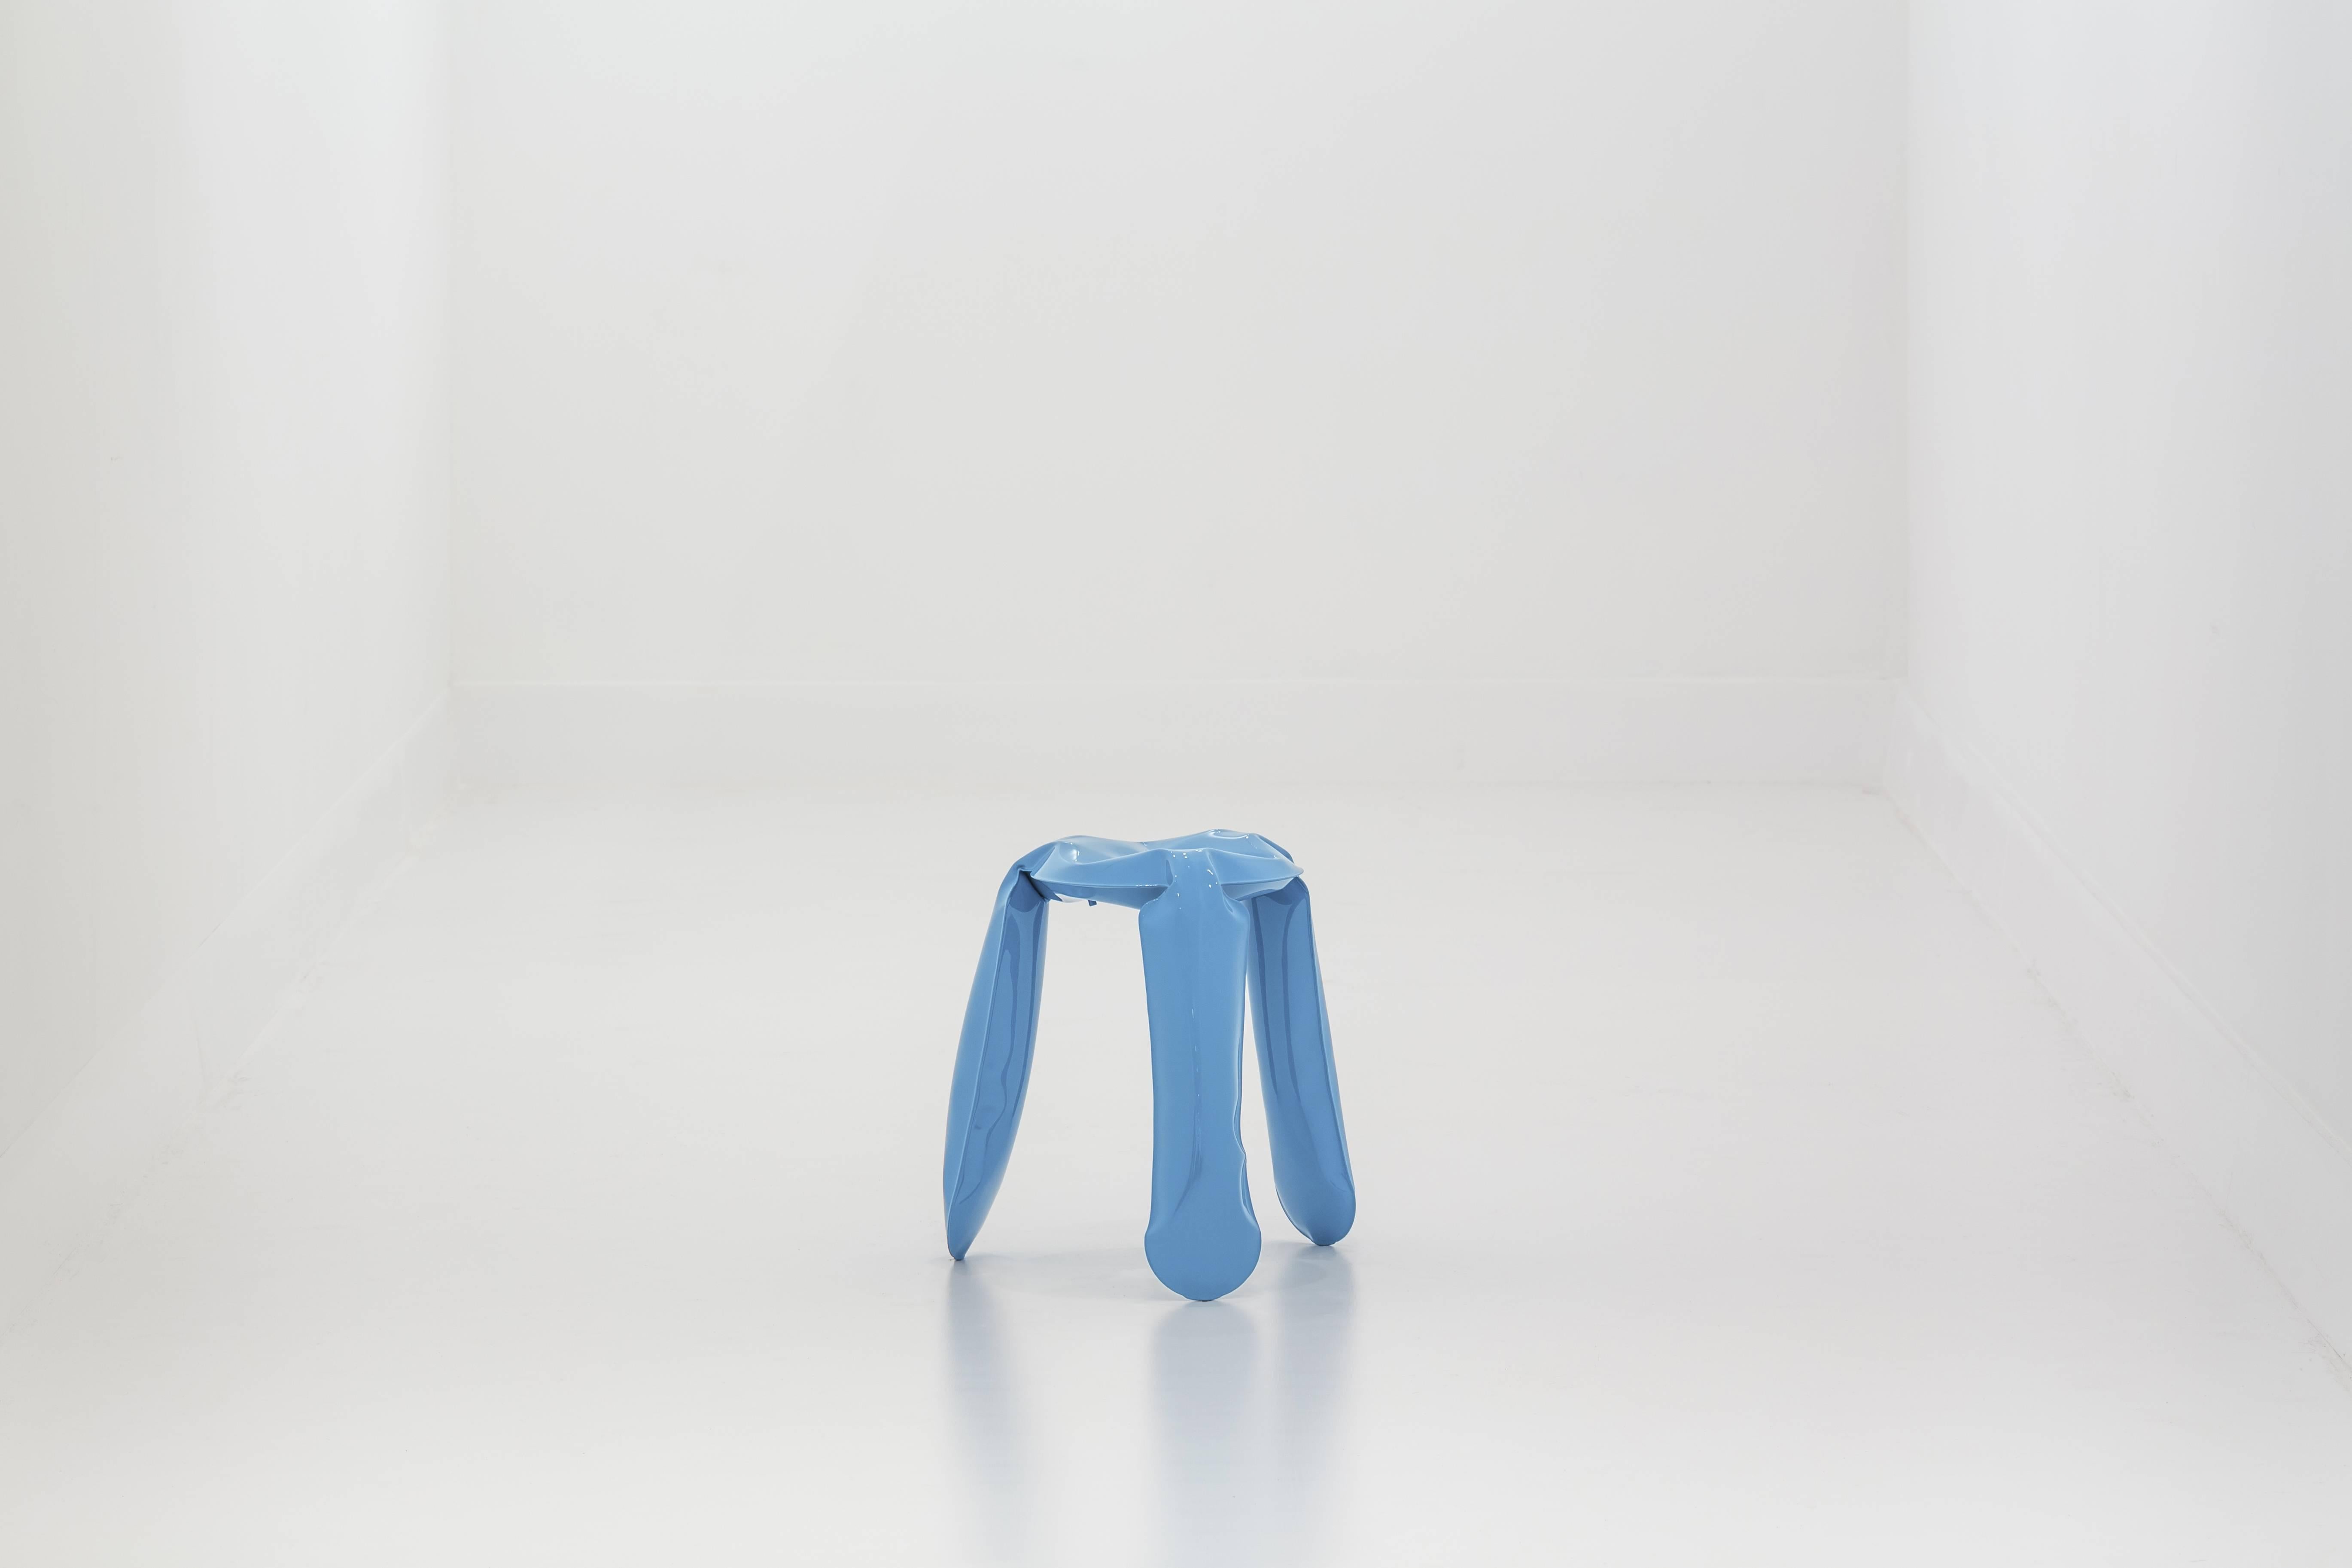 Contemporary Plopp Stool 'Mini' by Zieta Prozessdesign, Stainless Steel ‘Inox’ Version For Sale